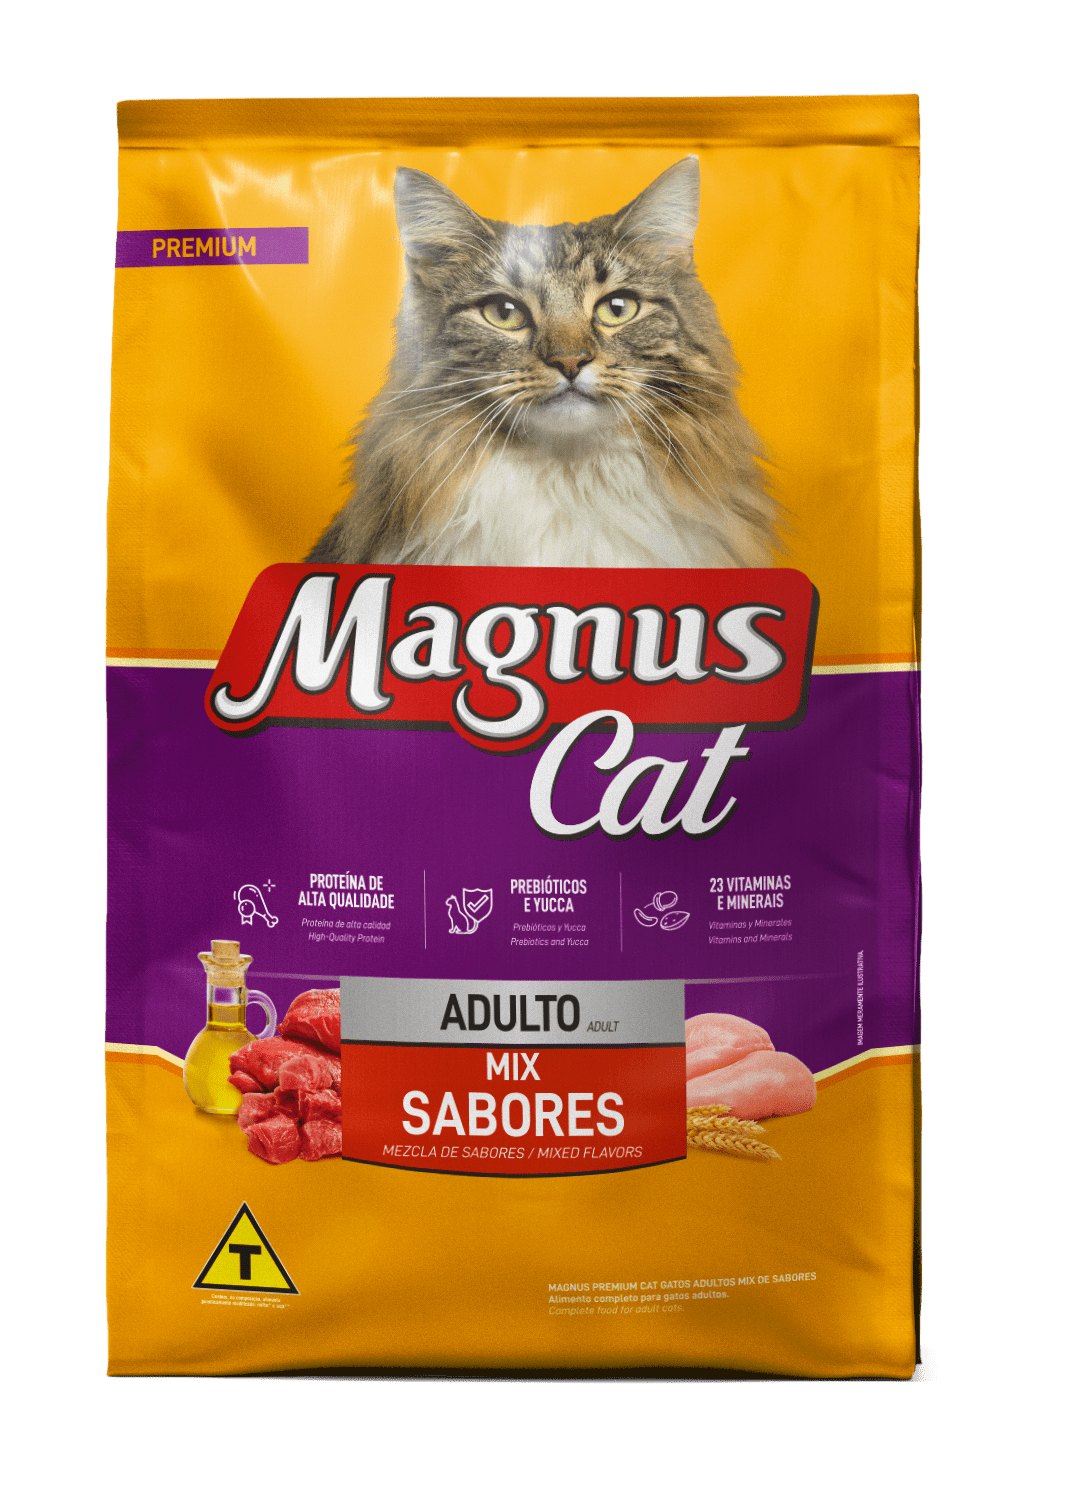 Magnus Cat Premium Adult Cats Mix Flavors